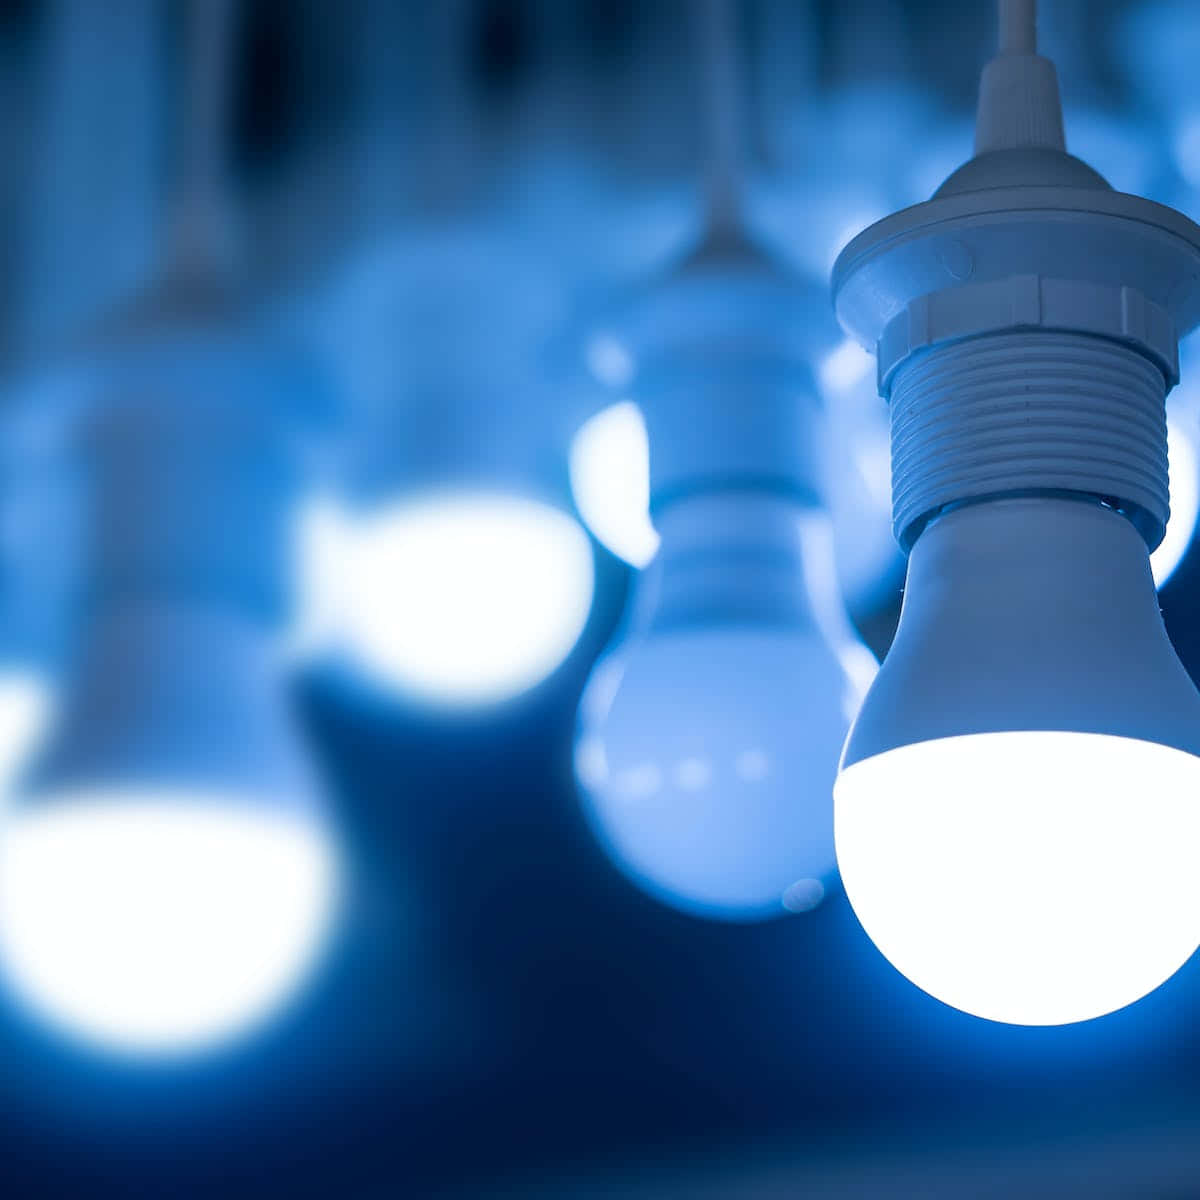 A Group Of Light Bulbs In A Dark Room